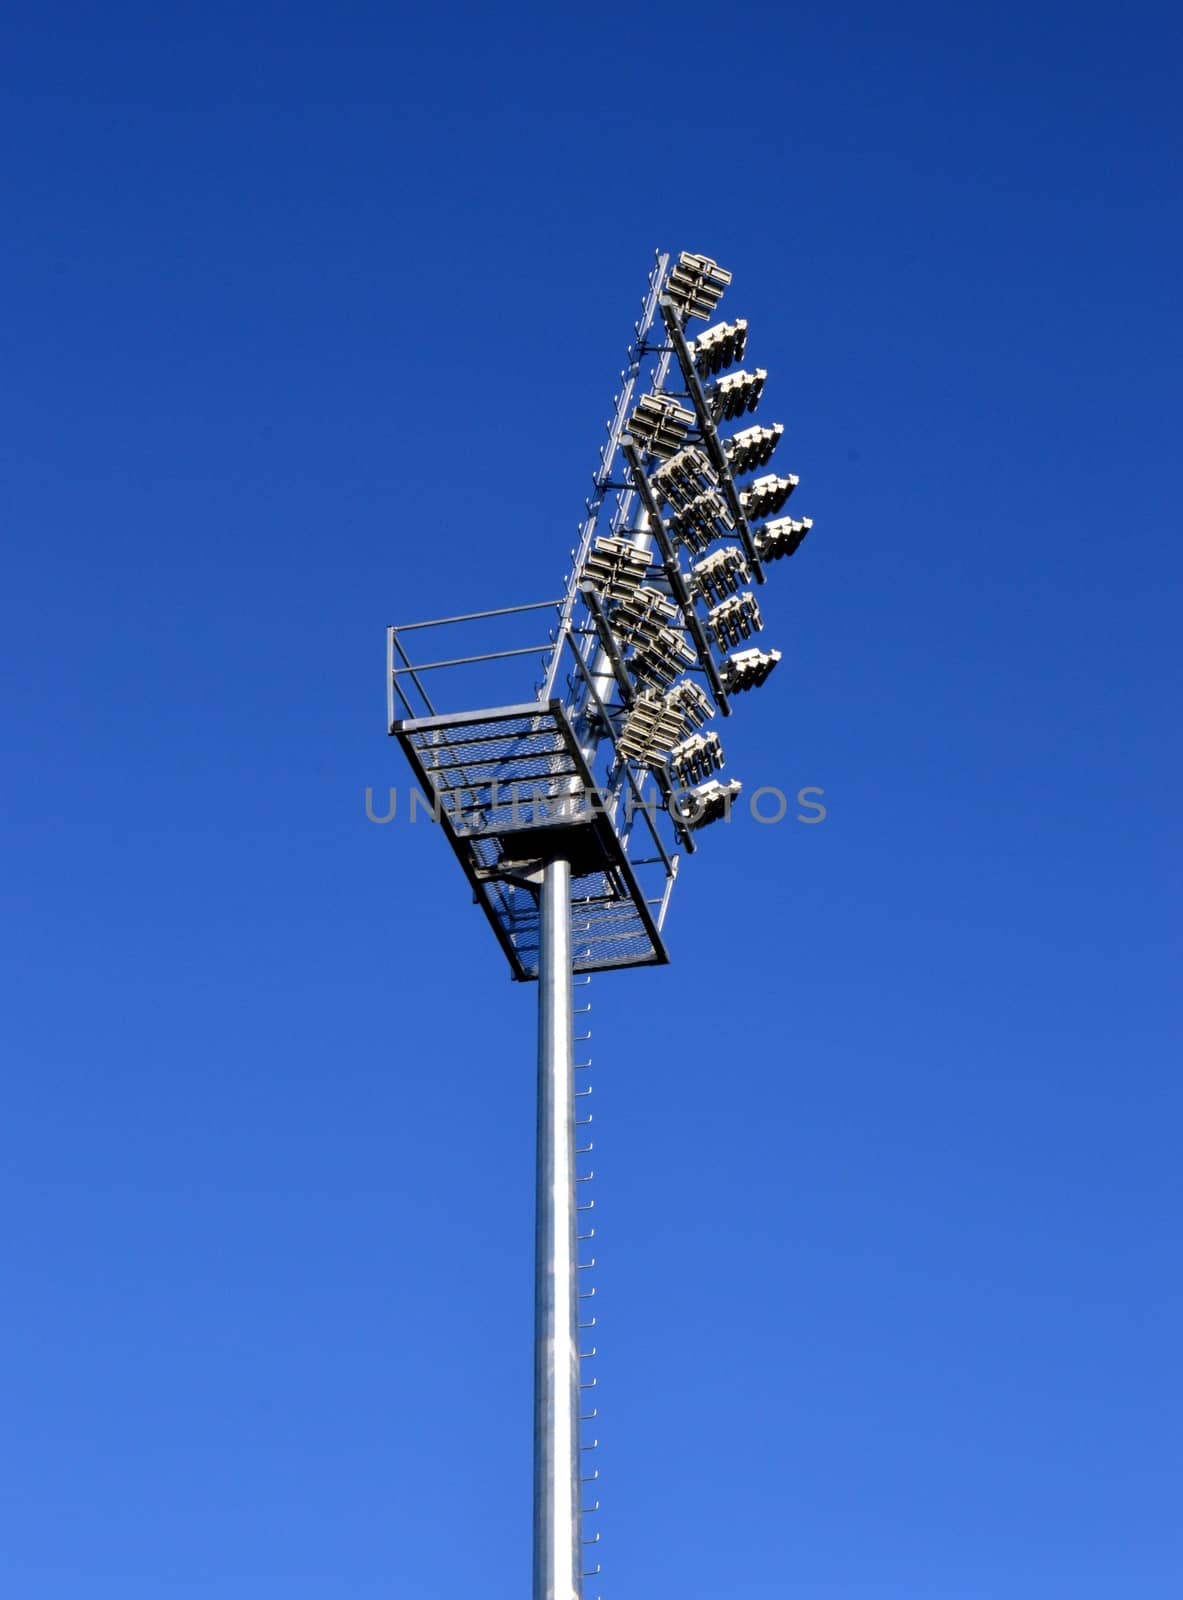 Lighting pylon of a football field with LED spotlights